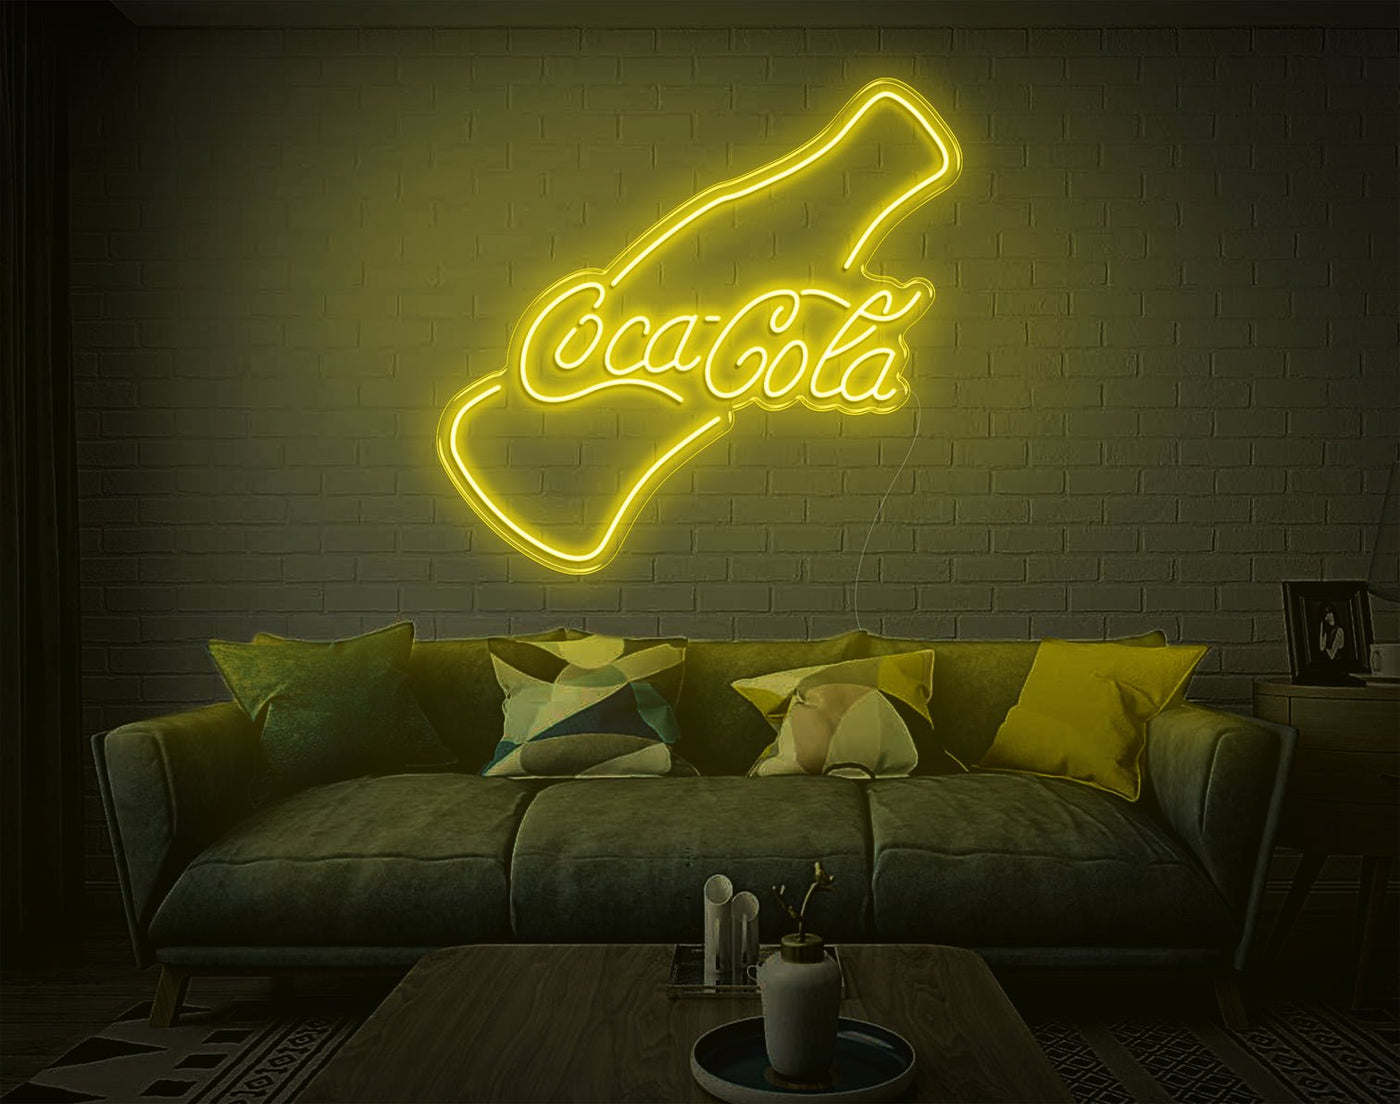 Coca-Cola V2 LED Neon Sign - 30inch x 32inchYellow